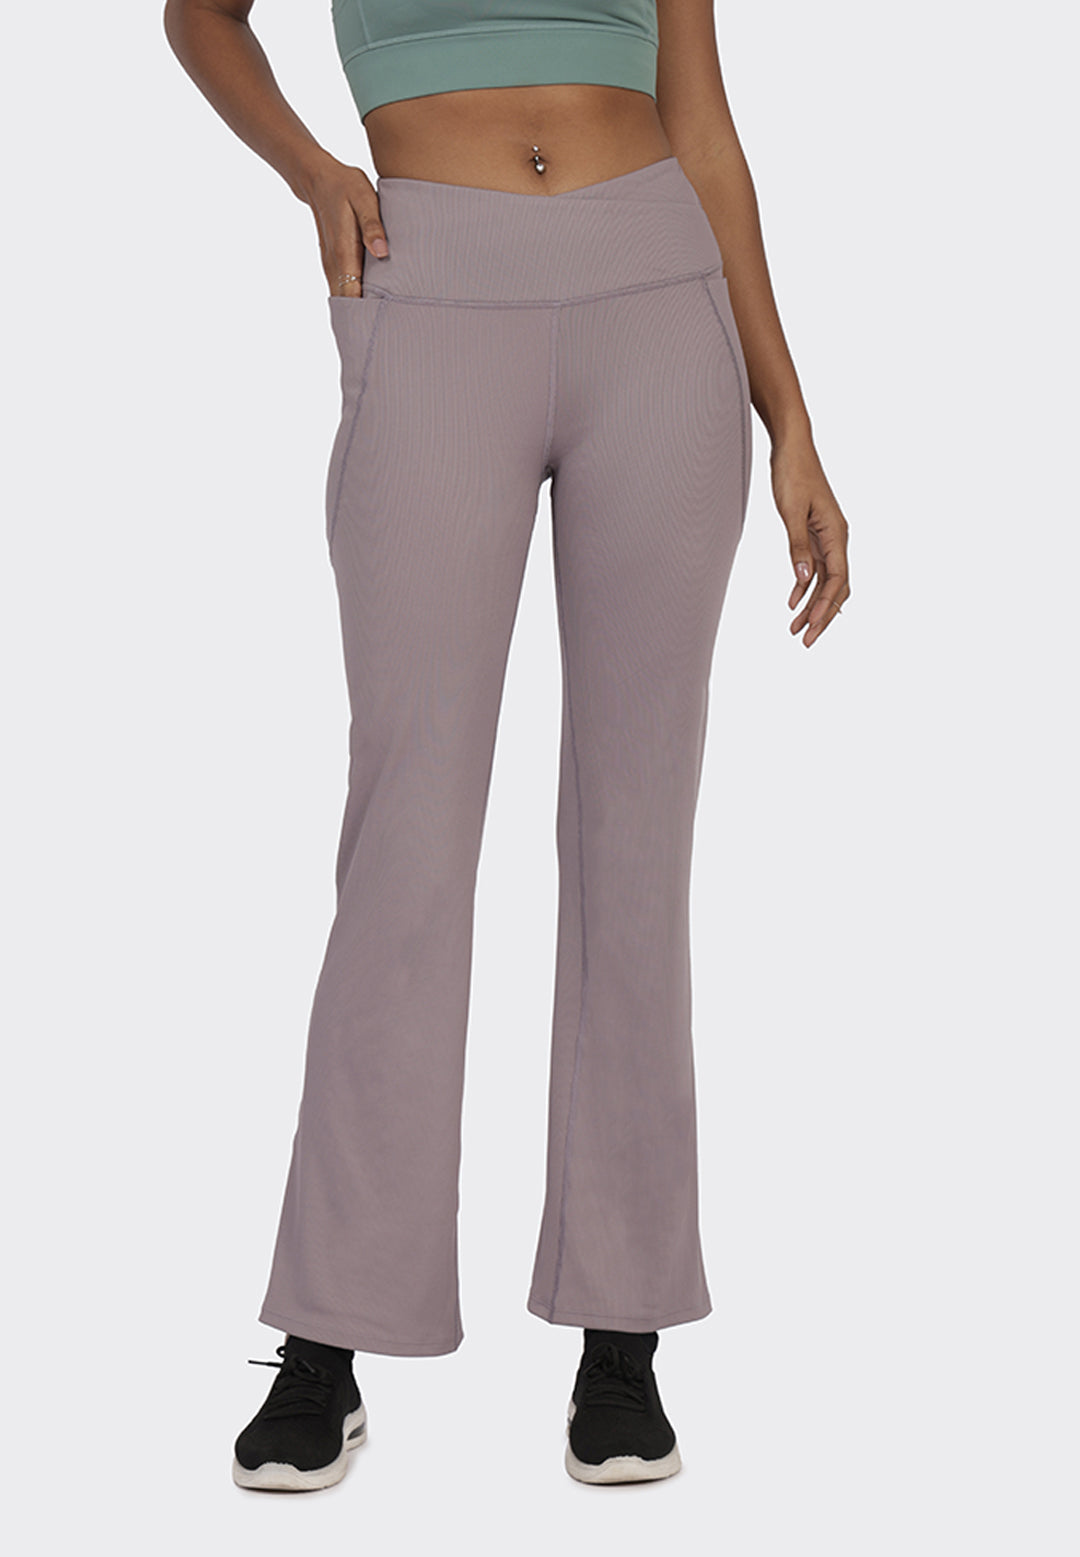 Buy BlissClub Women Werk-It Flare Pants, High-Rise, Wide Waistband, Lightweight & Breathable CottonFlex Fabric, 4 Pockets, Herringbone Pattern